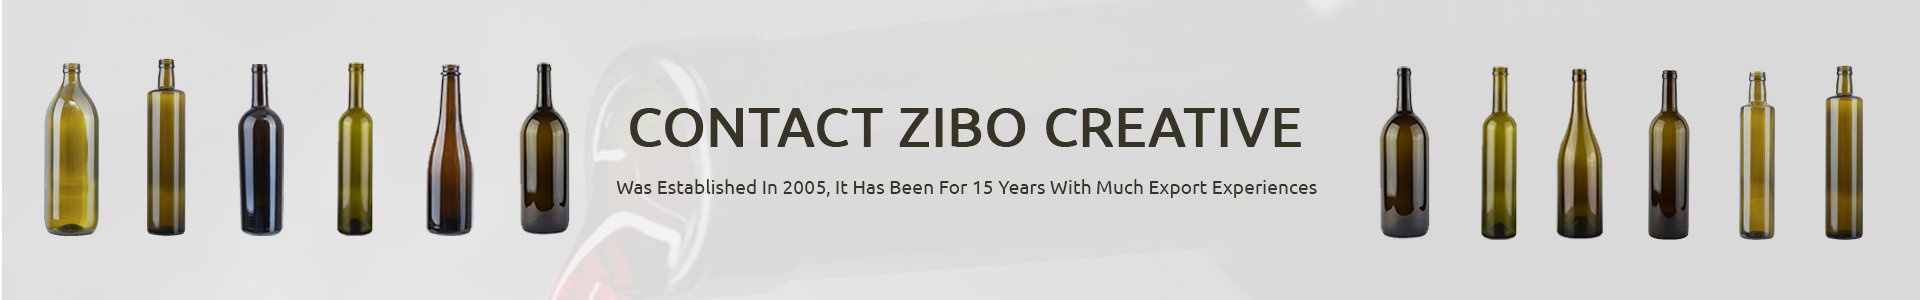 Contact-Zibo-Creative_1